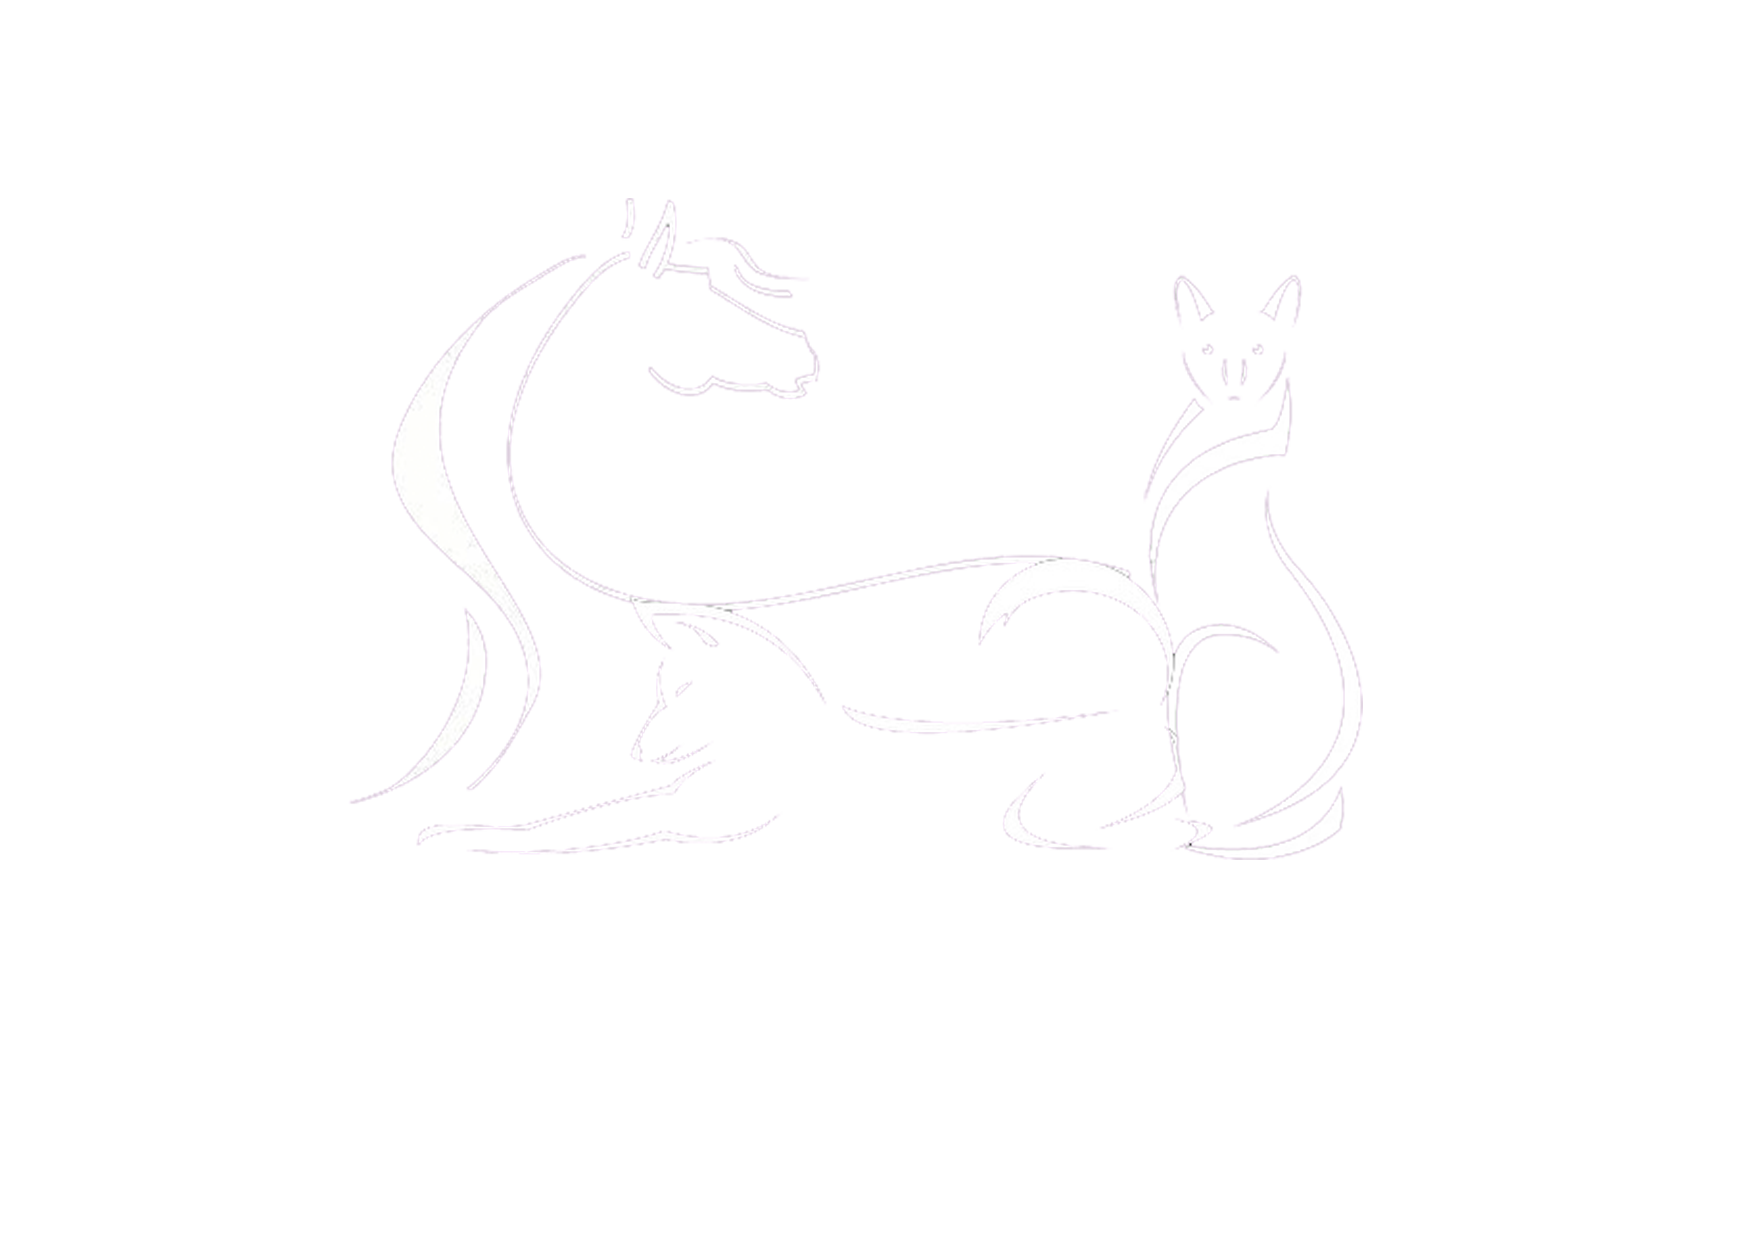 Ostéopatte'mobile